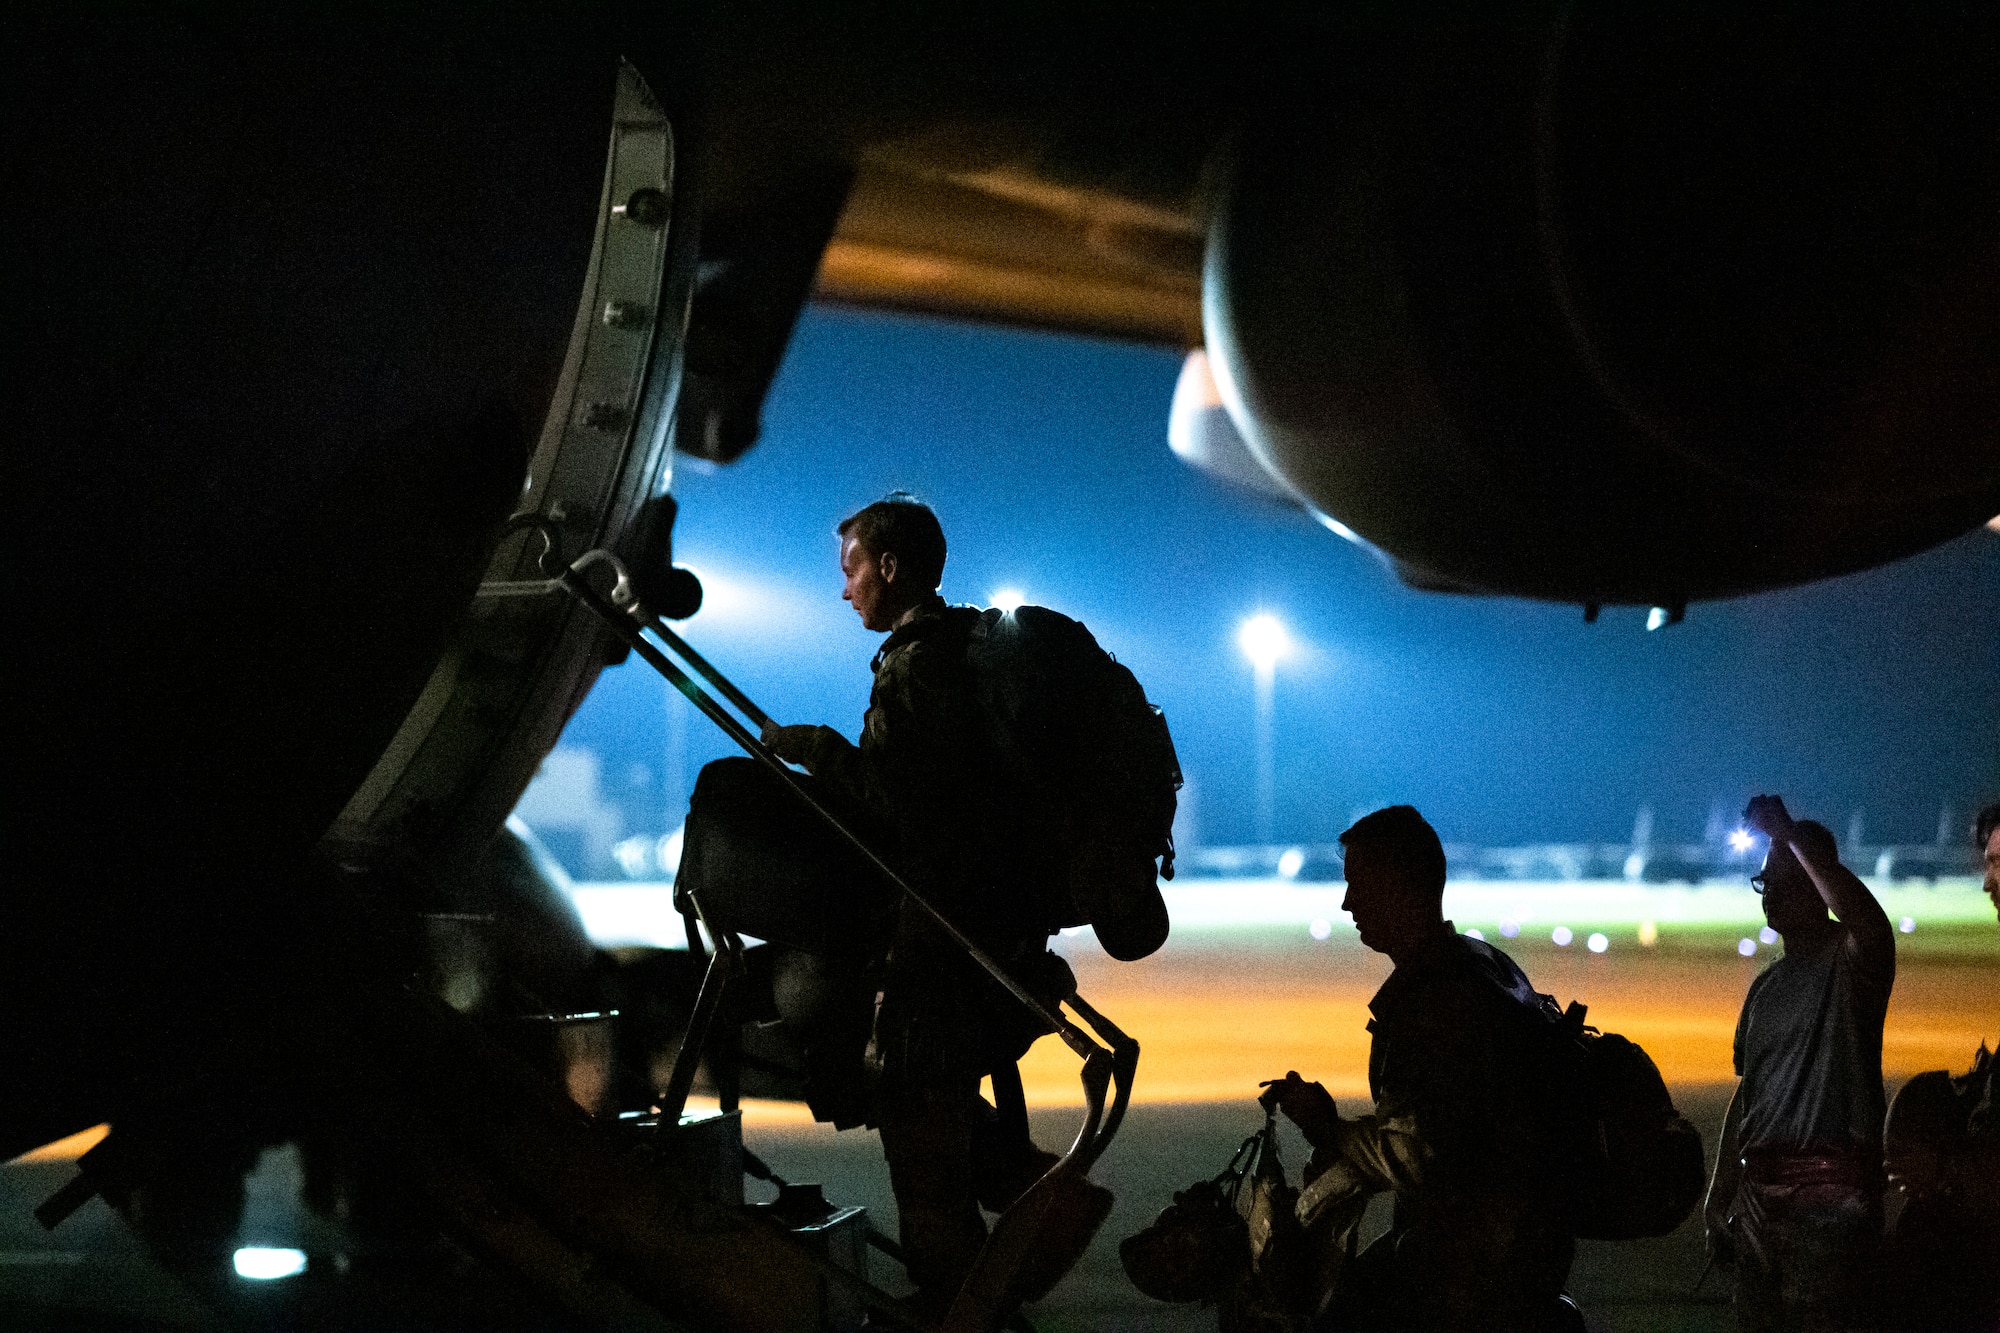 Photo of Airmen boarding an aircraft